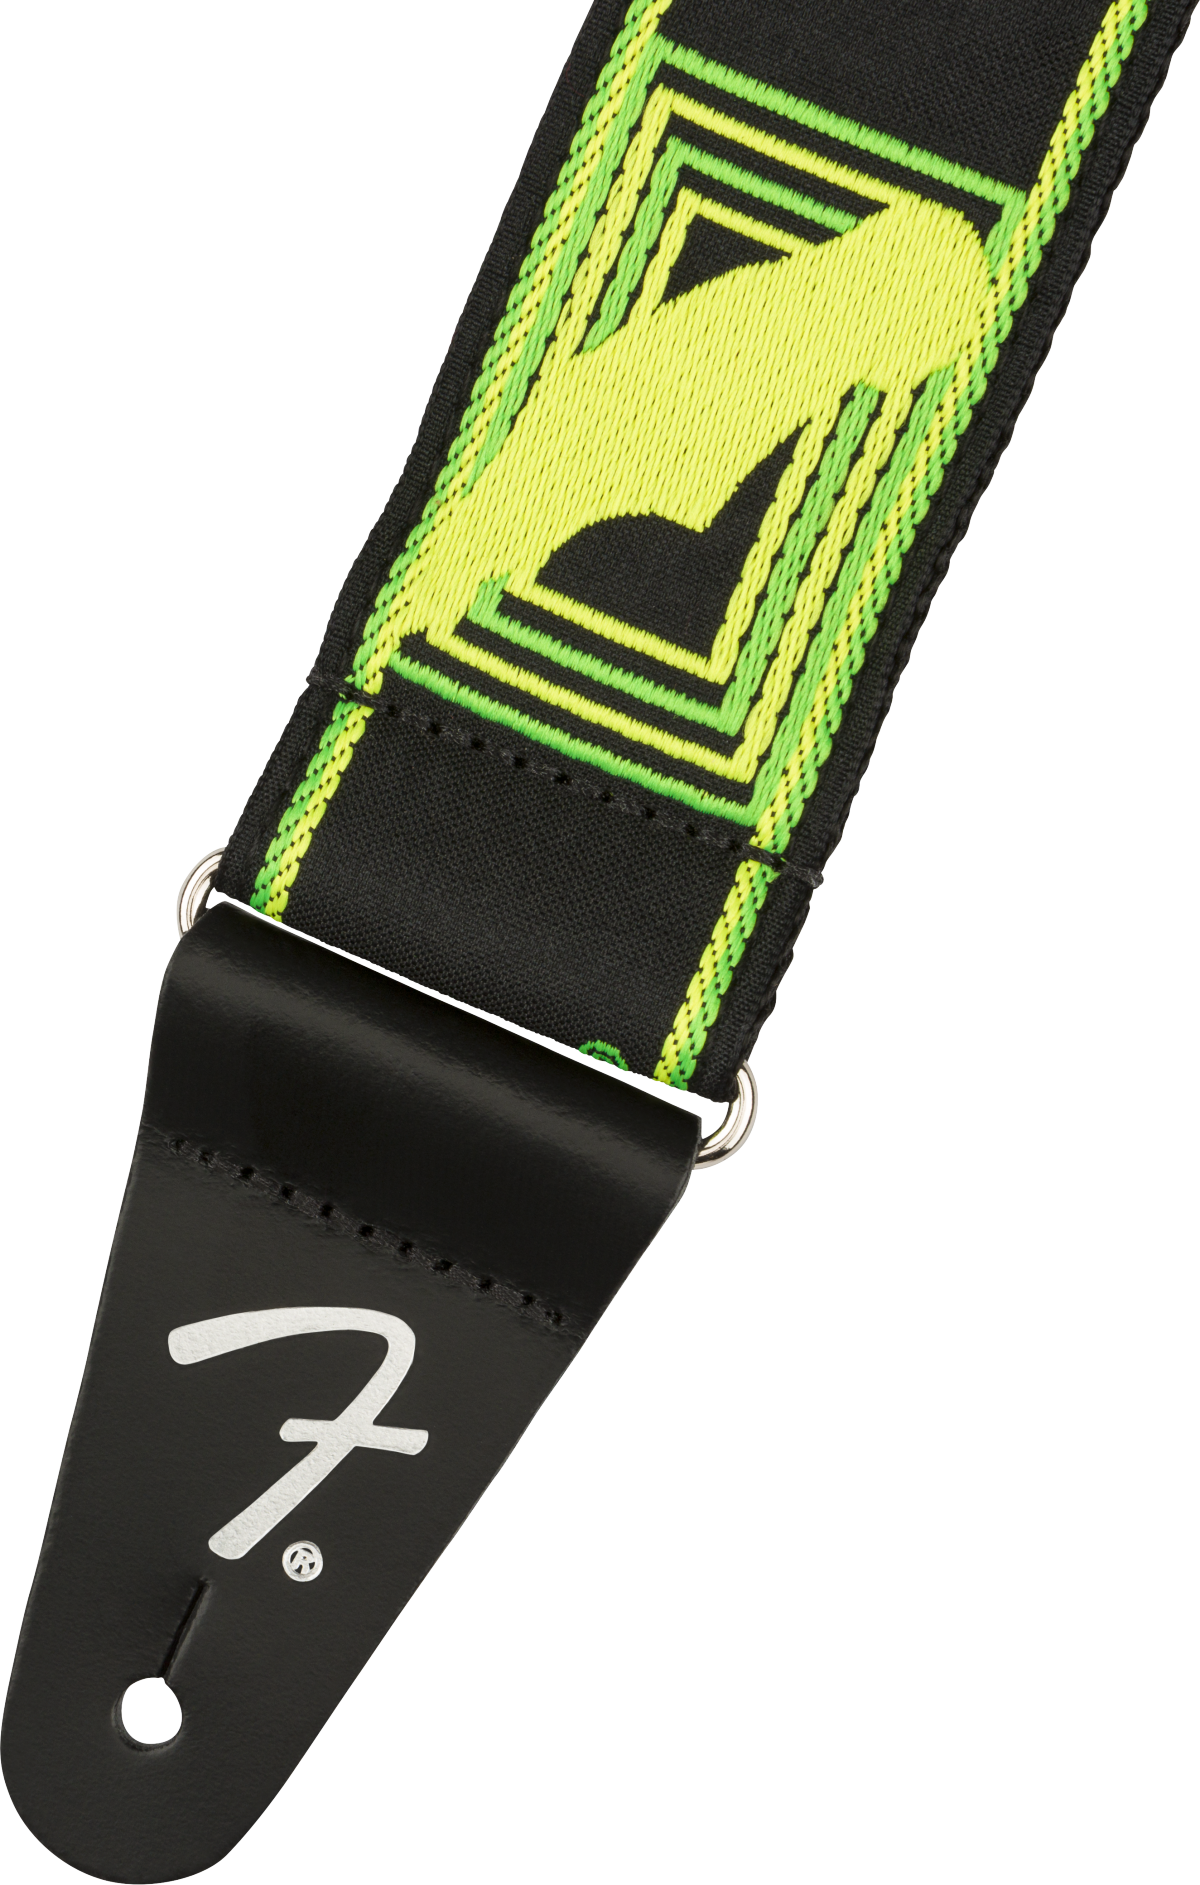 Fender Neon Monogrammed Strap - Yellow/Green